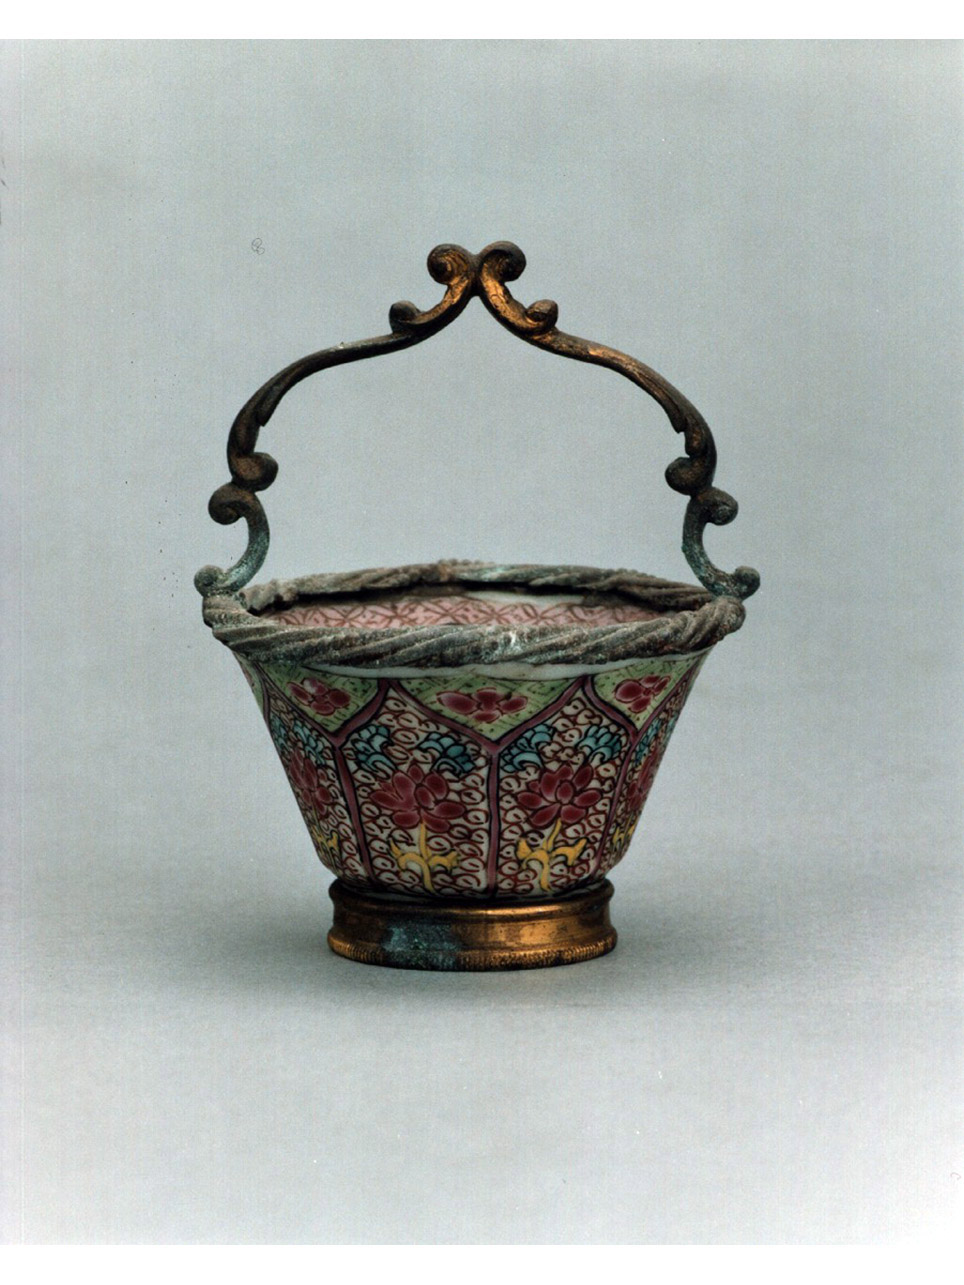 motivi decorativi floreali (vasetto) - manifattura cinese, produzione europea (sec. XVIII)